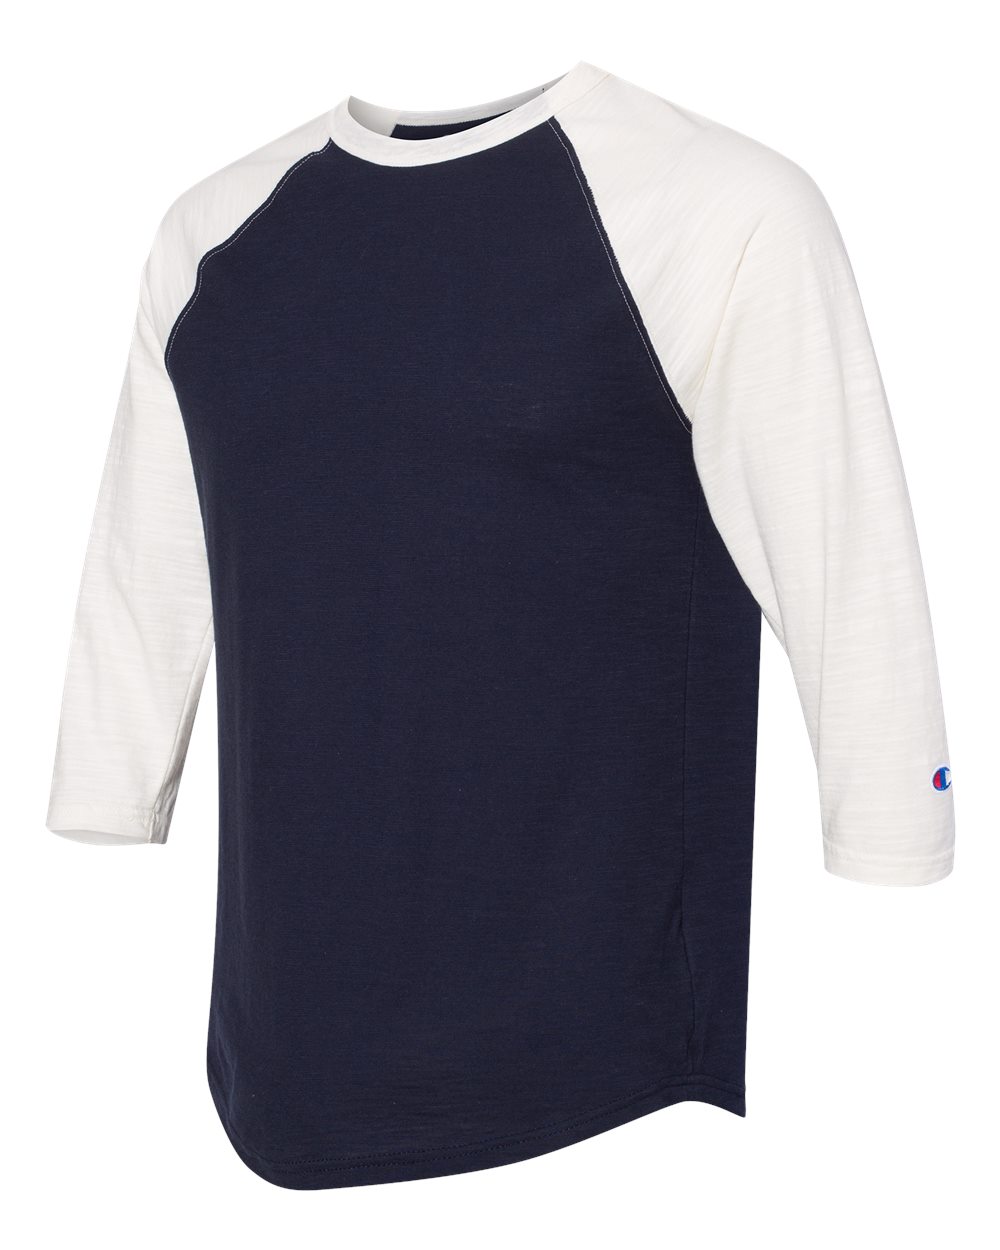 Champion CP75 - Premium Fashion Baseball T-Shirt